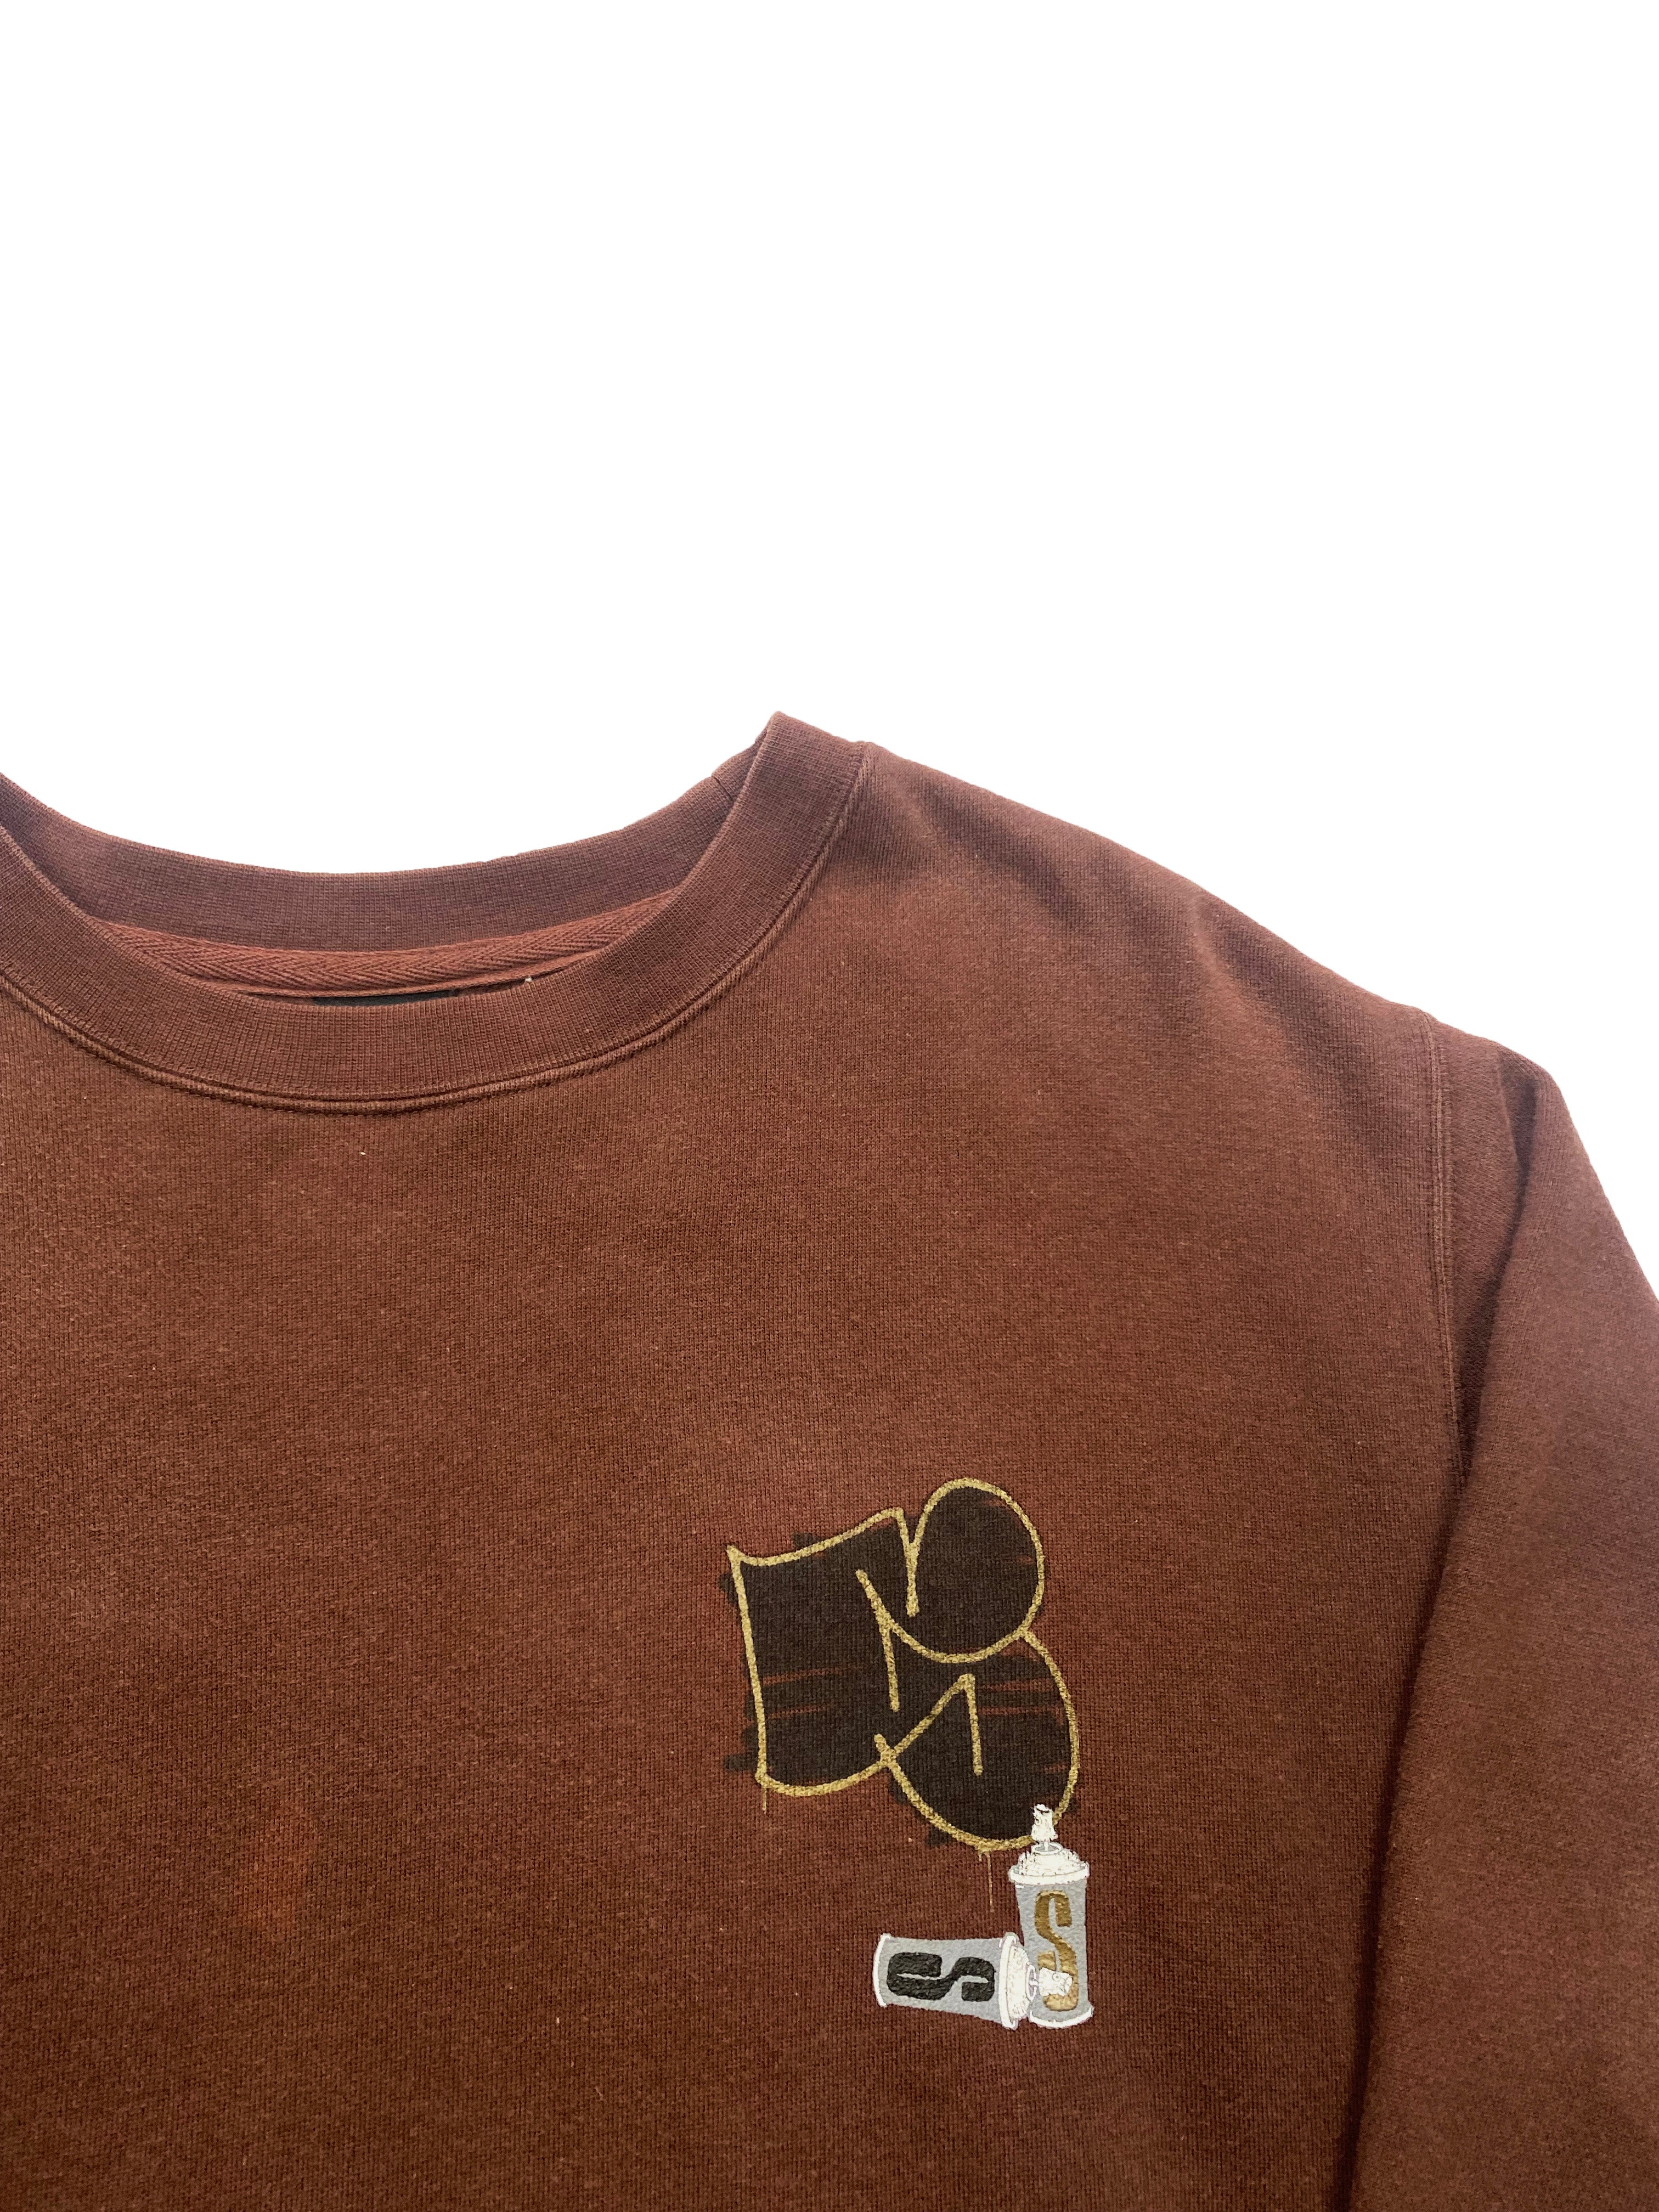 Stussy Spray Can Brown Sweatshirt 90's